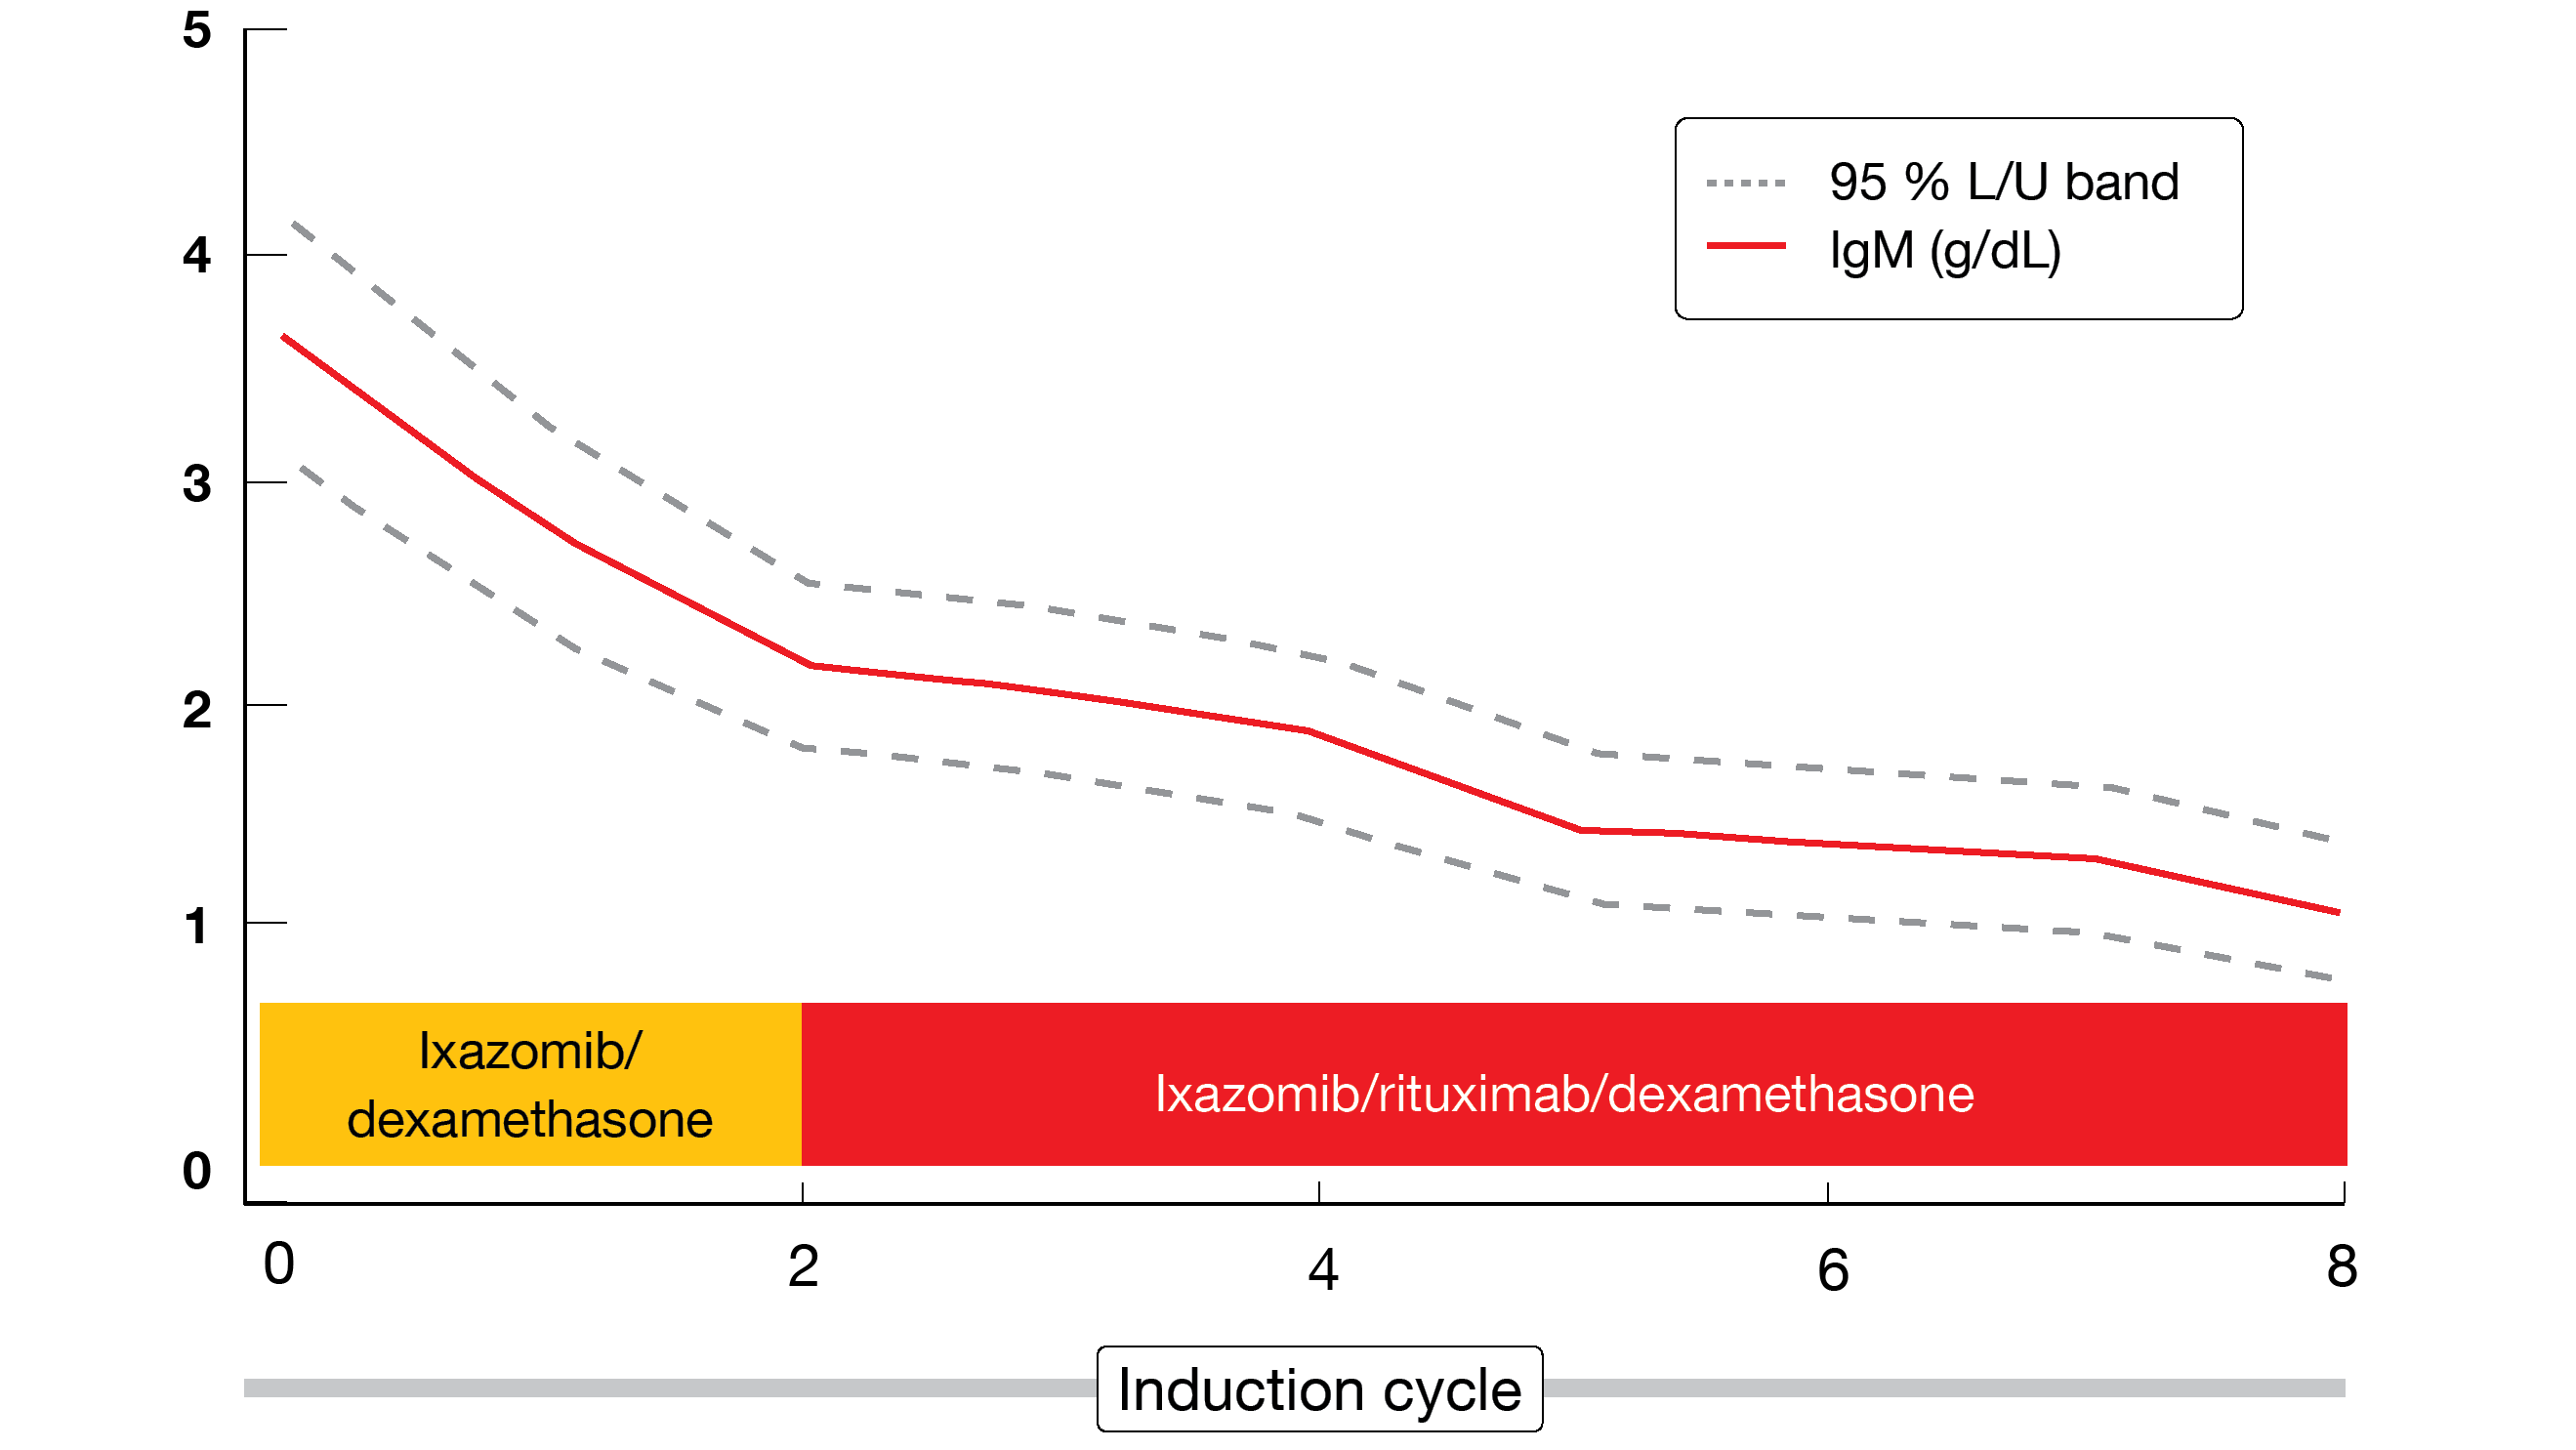 Figure 3: IgM response with ixazomib/rituximab/dexamethasone: decrease in IgM levels even prior to the initiation of rituximab treatment